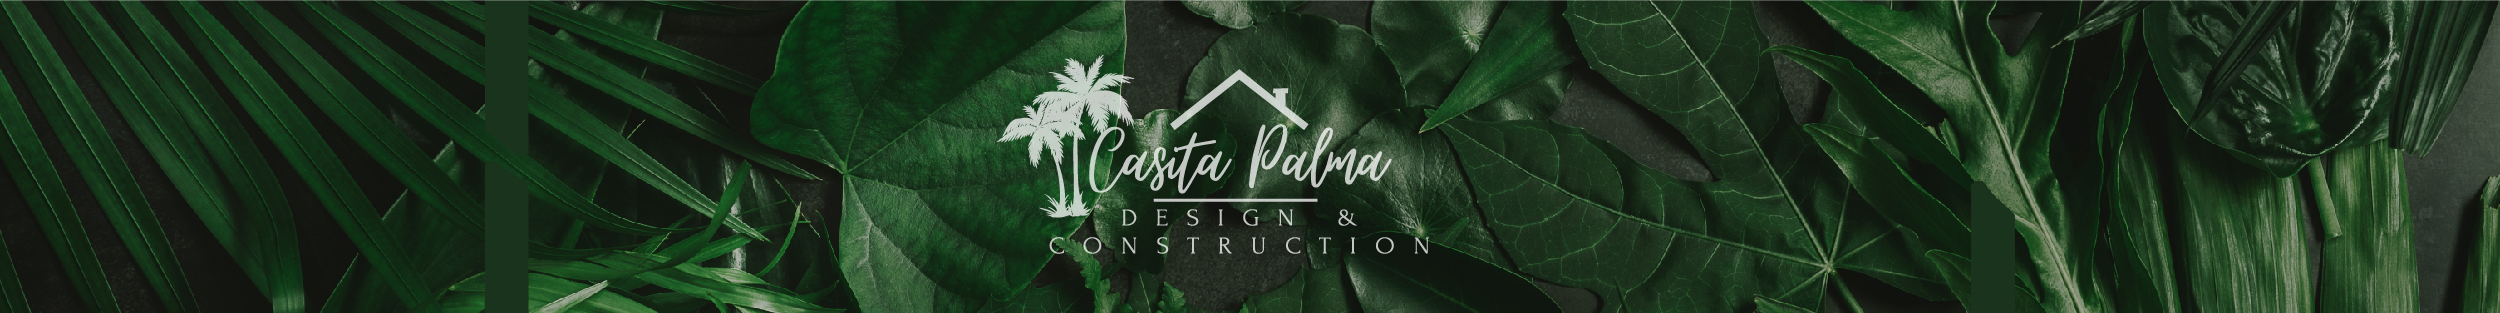 Casita Palma Design and Construction LLC Home Renovation Remodeling